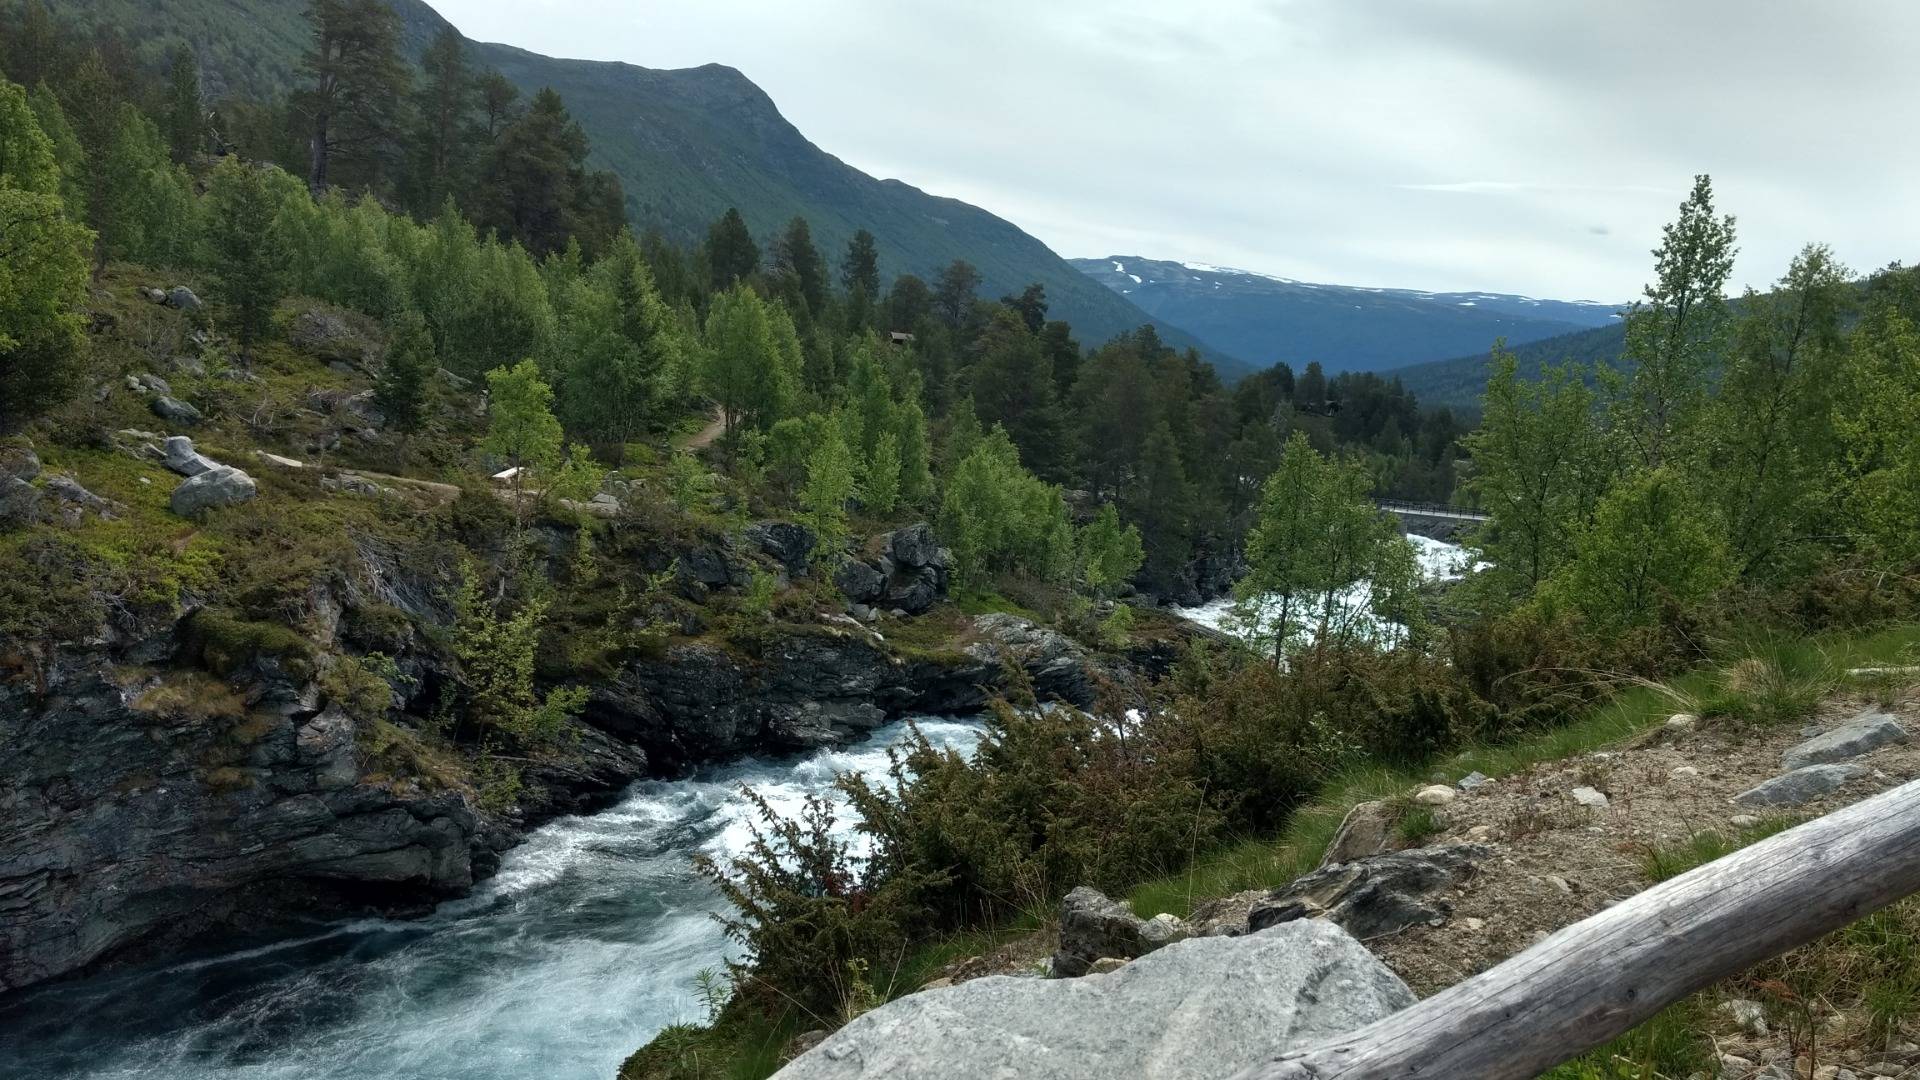 An Epic Norwegian Road Trip Part 3: Wild Water at Reinheimen